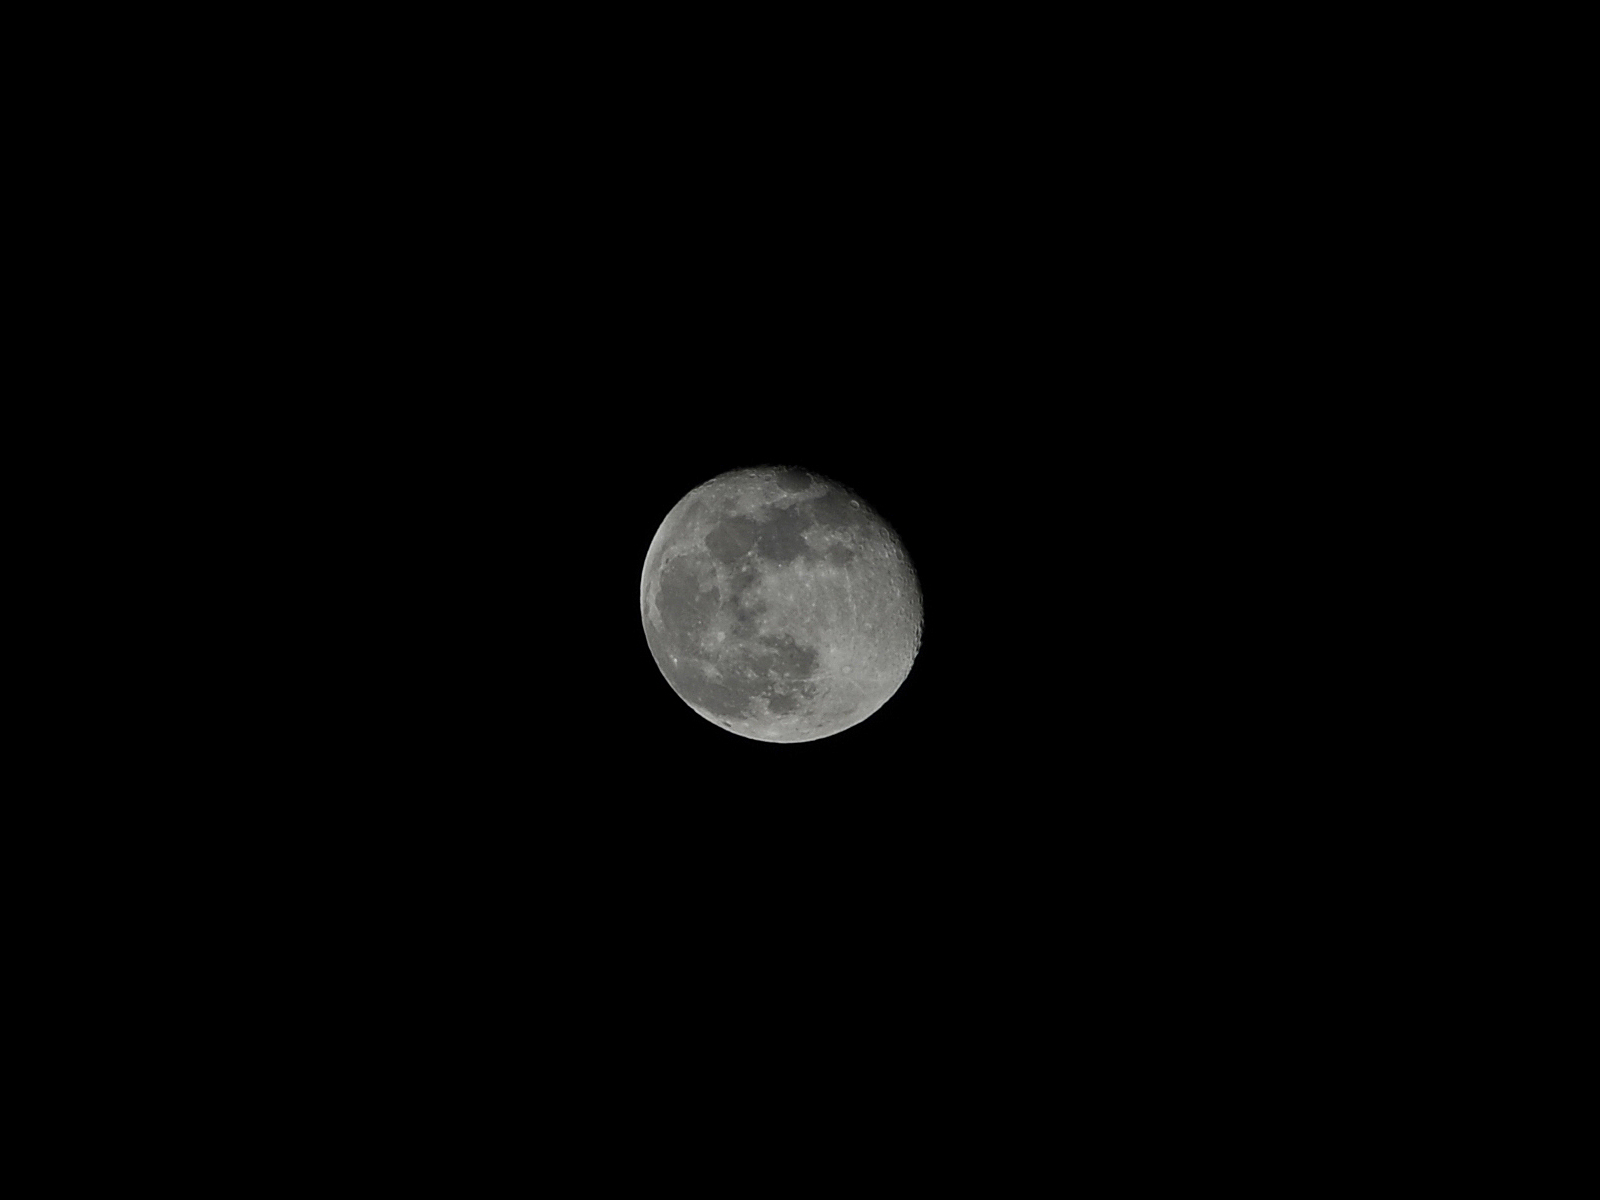 Near full moon december 06, 2006 photo